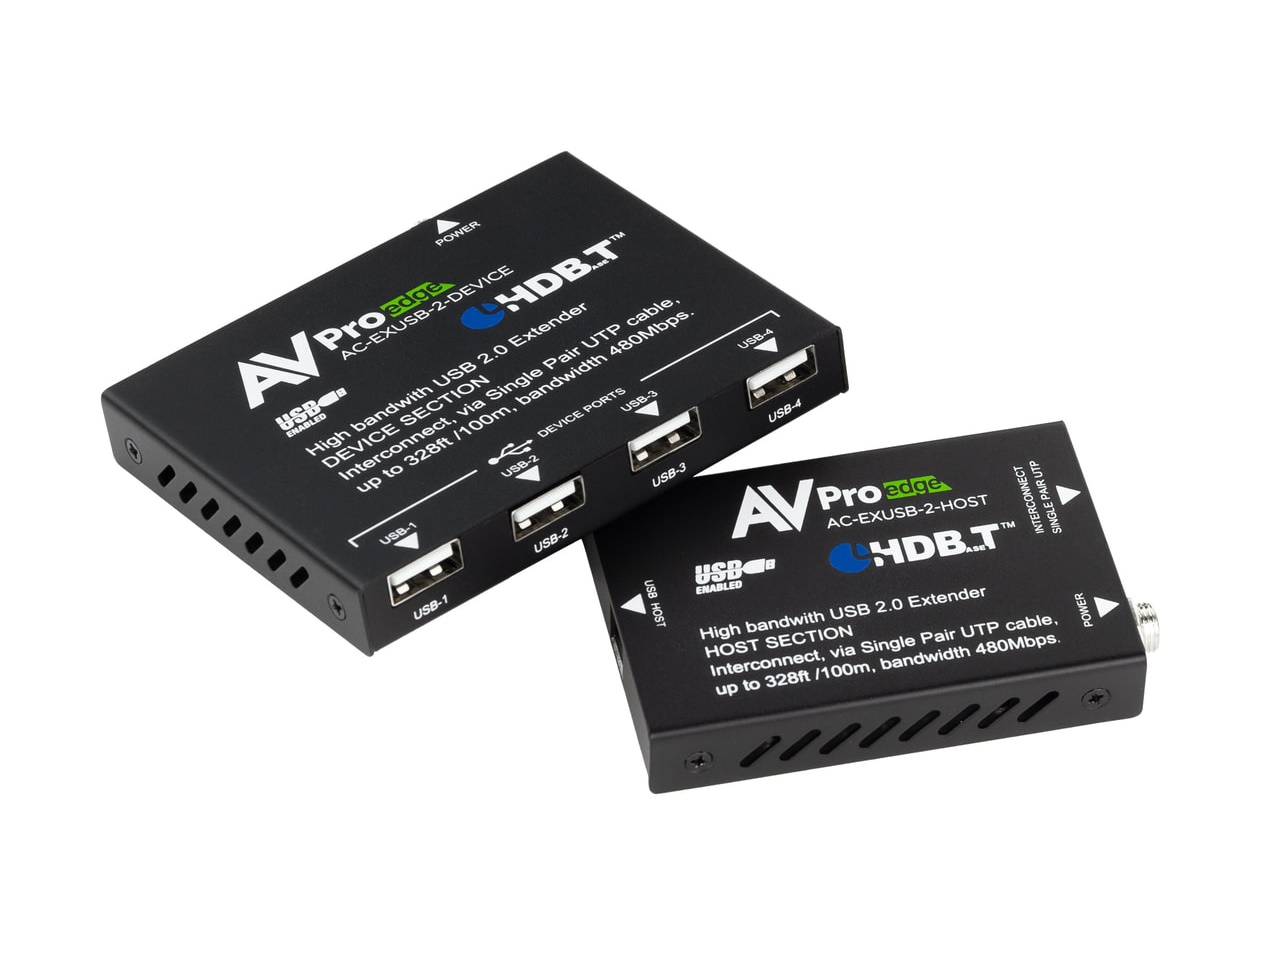 AVPro Edge AC-EXUSB-2-KIT USB 2.0 via HDBaseT Extender (Transmitter/Receiver) Kit up to 100 Meters